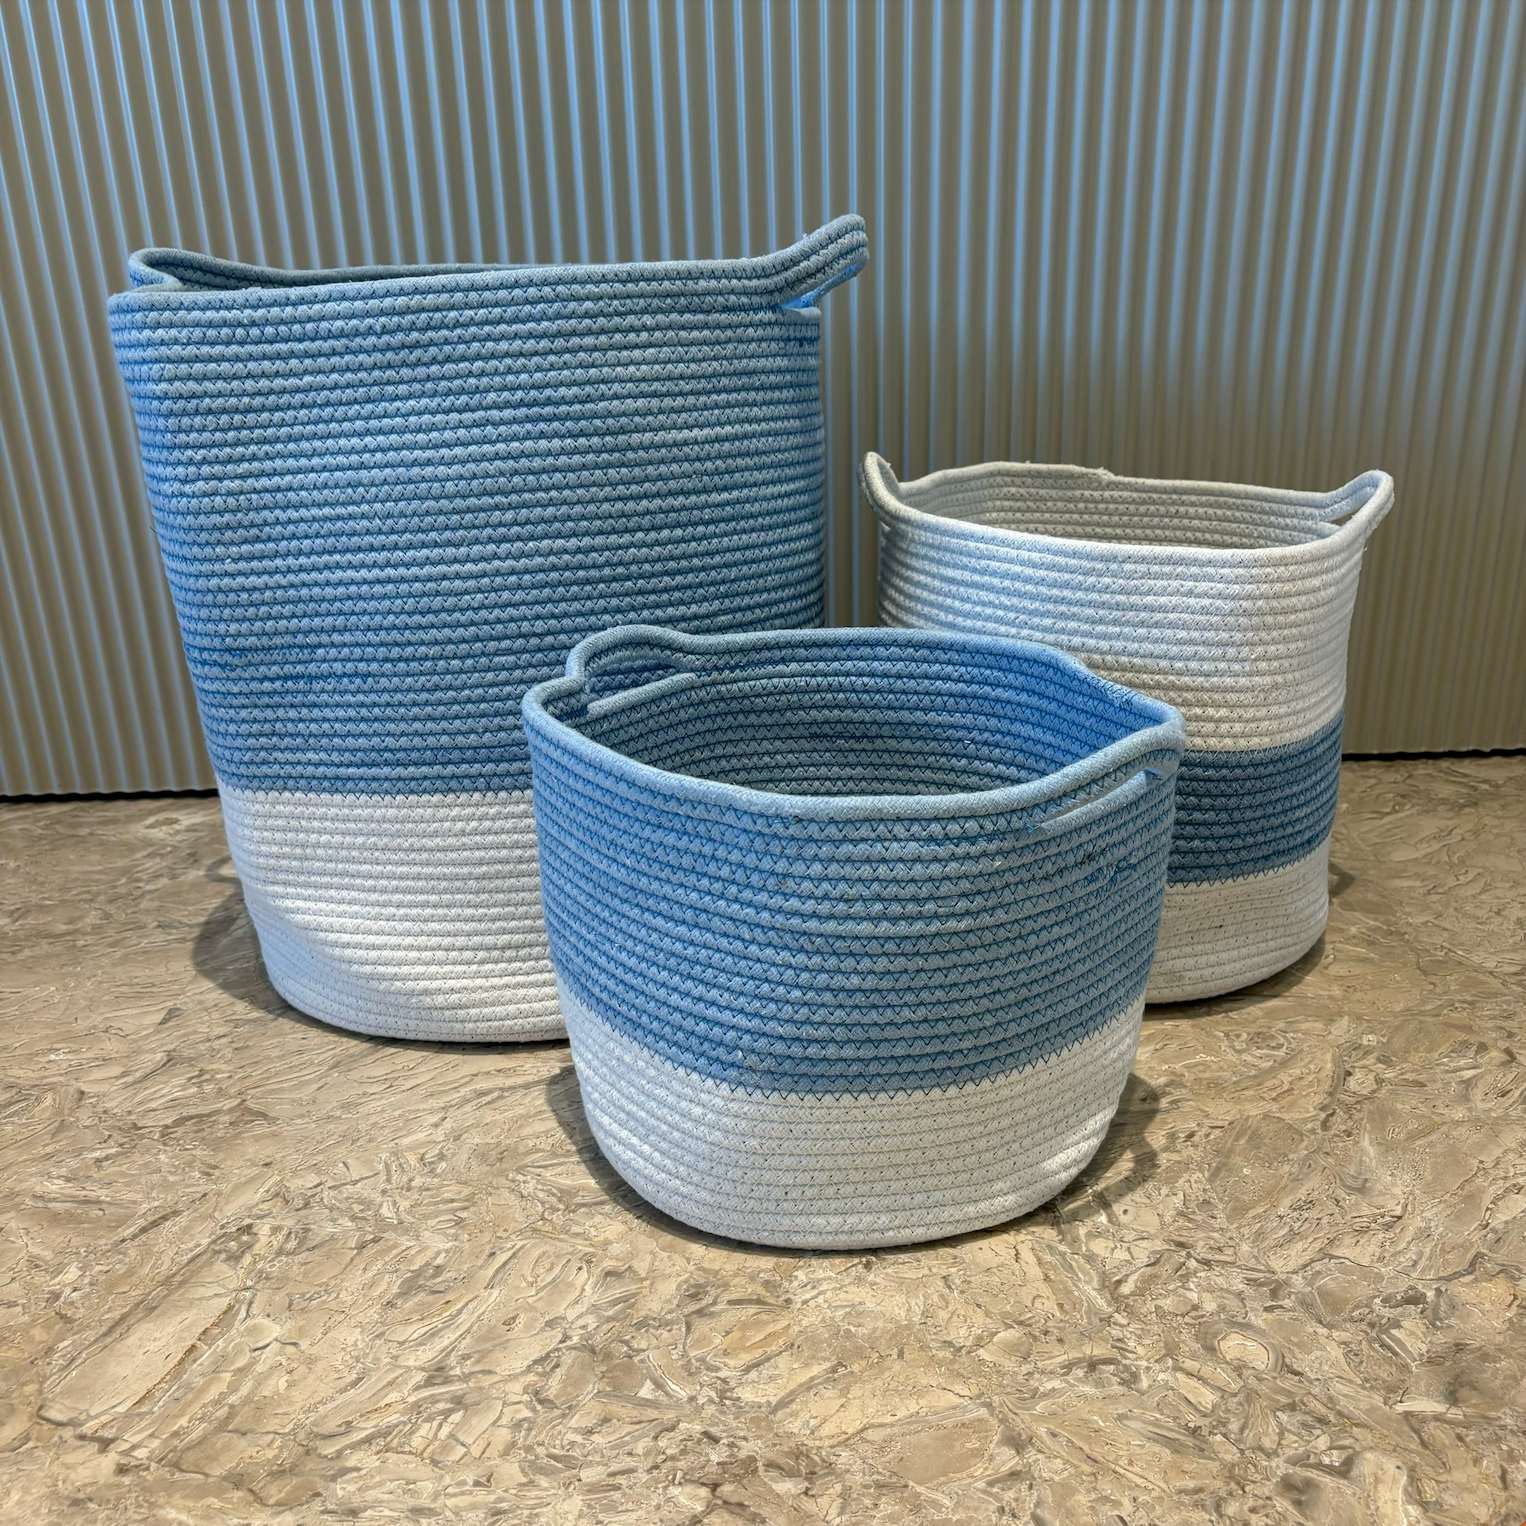 Personalised Storage Basket - Medium, Blue <br> CLEARANCE SALE